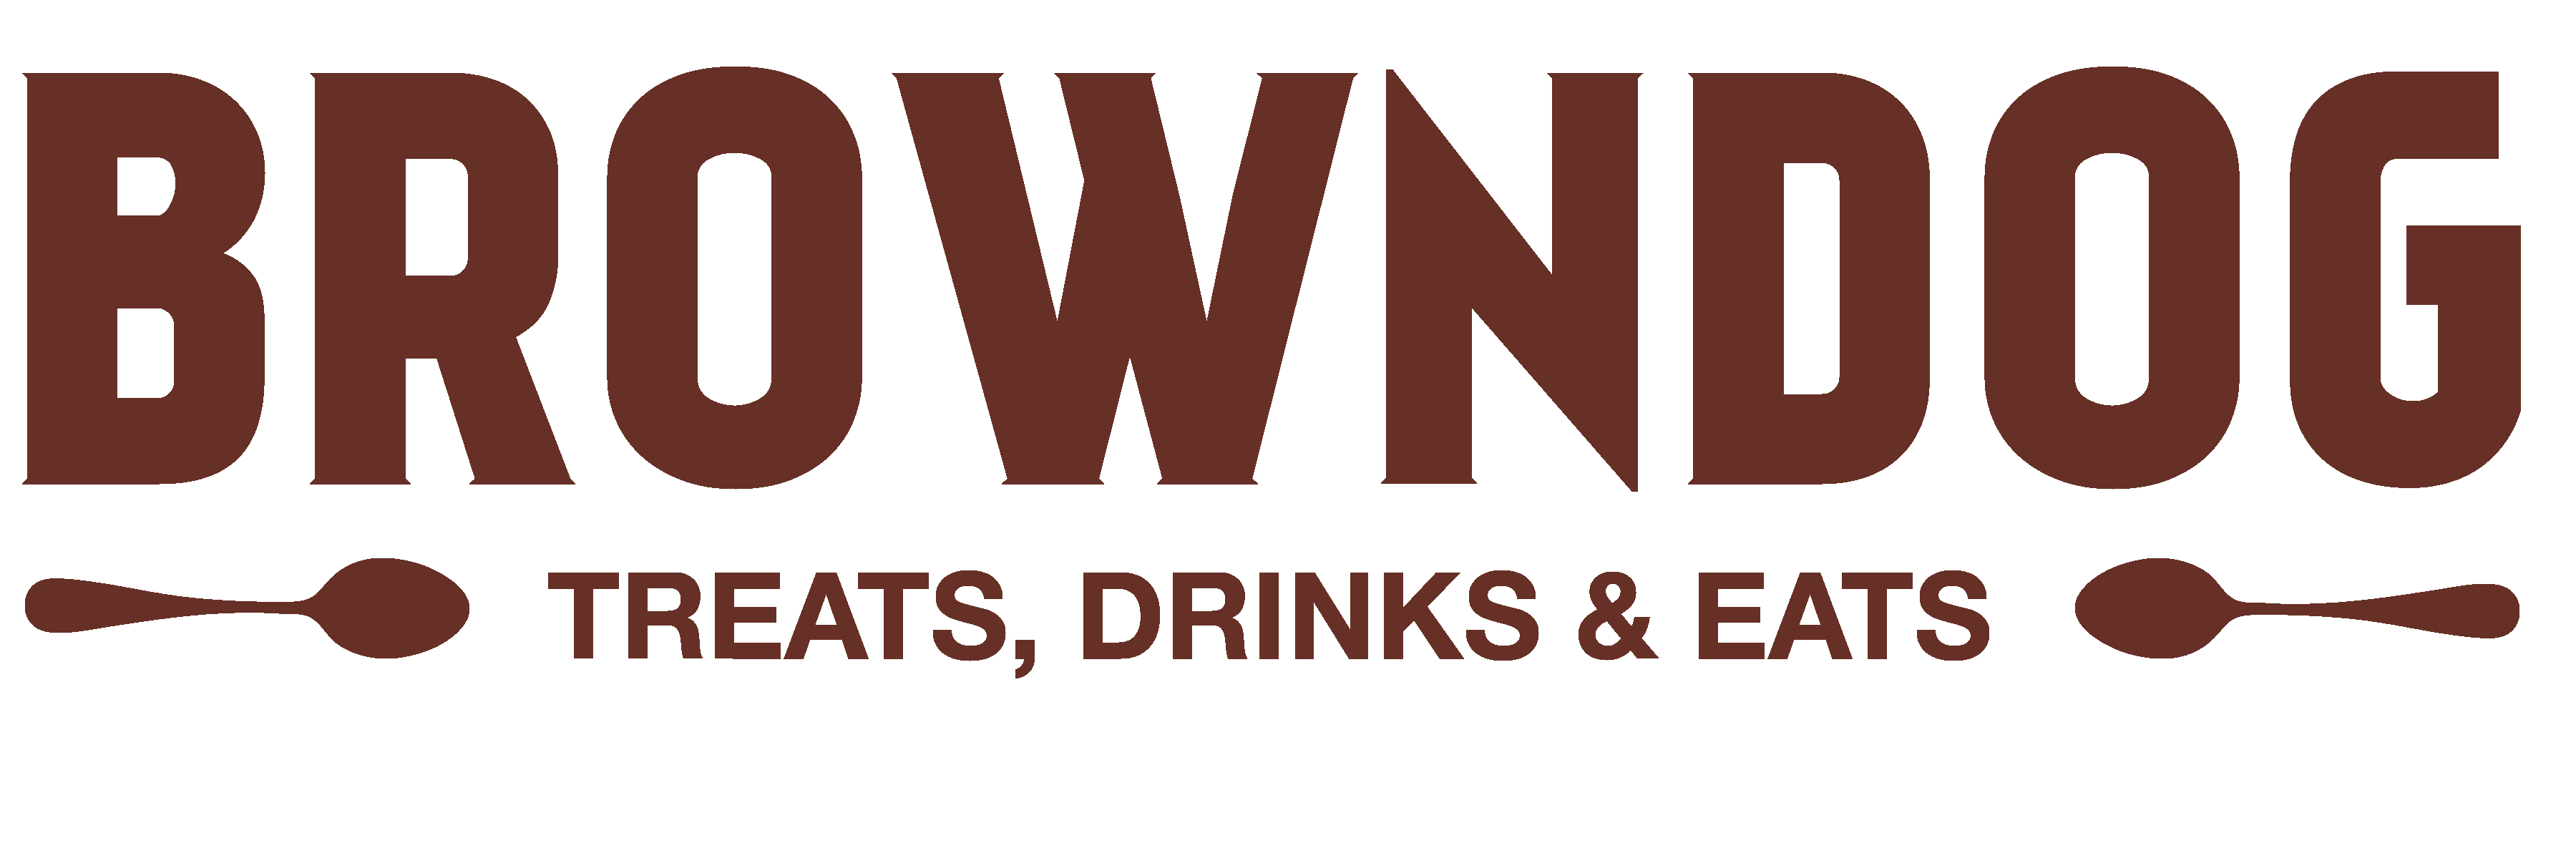 Brown Dog Logo - BROWNDOG BARLOR & RESTAURANT - Cocktails, dinner, dessert, ice cream